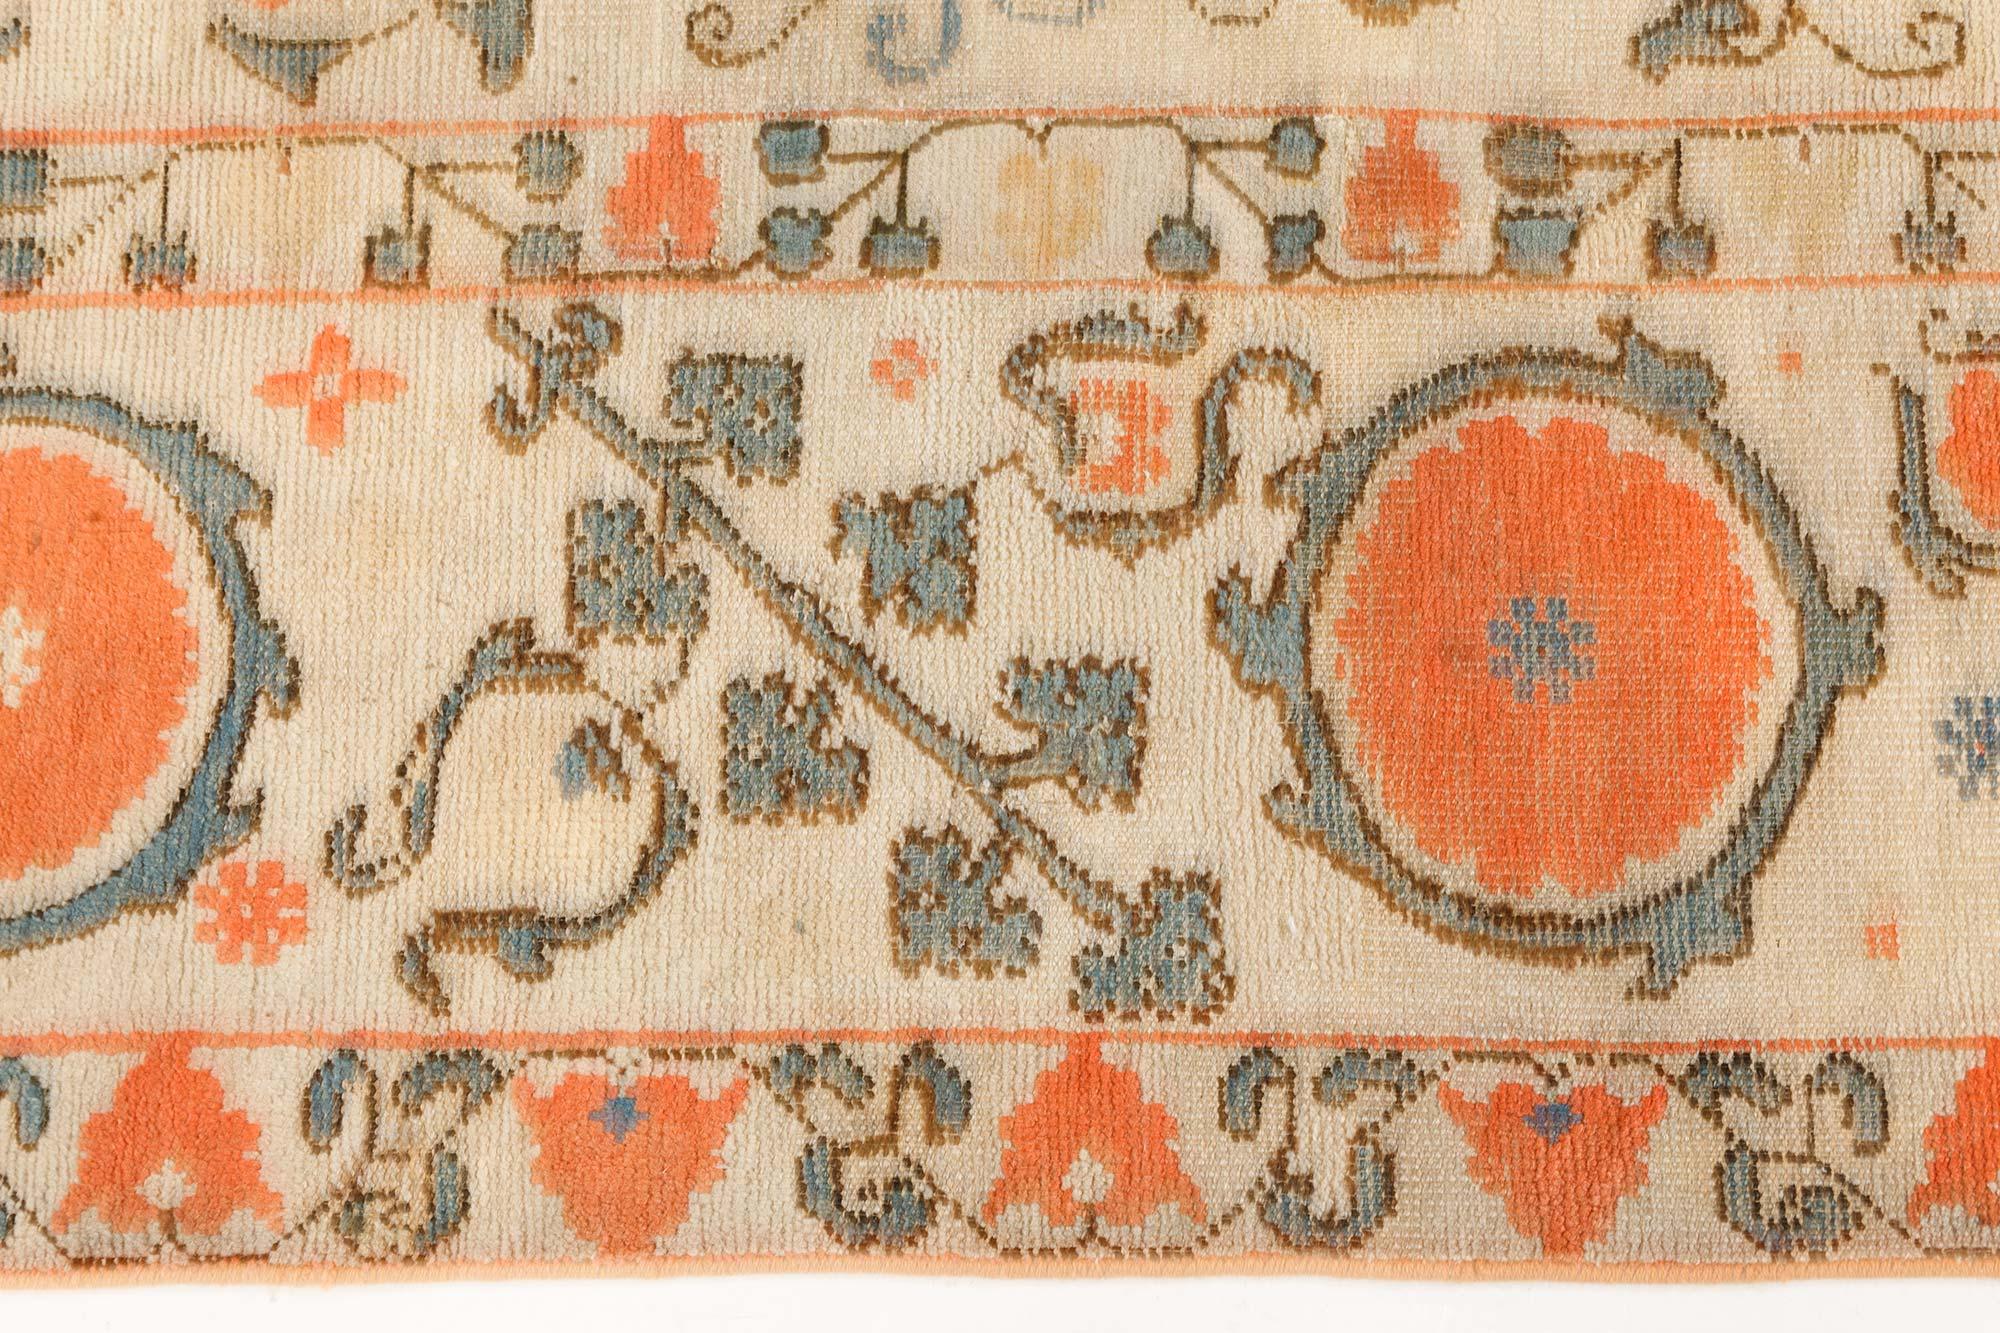 Vintage Samarkand 'Khotan' Orange Handmade Wool Carpet.
Größe: 5'3